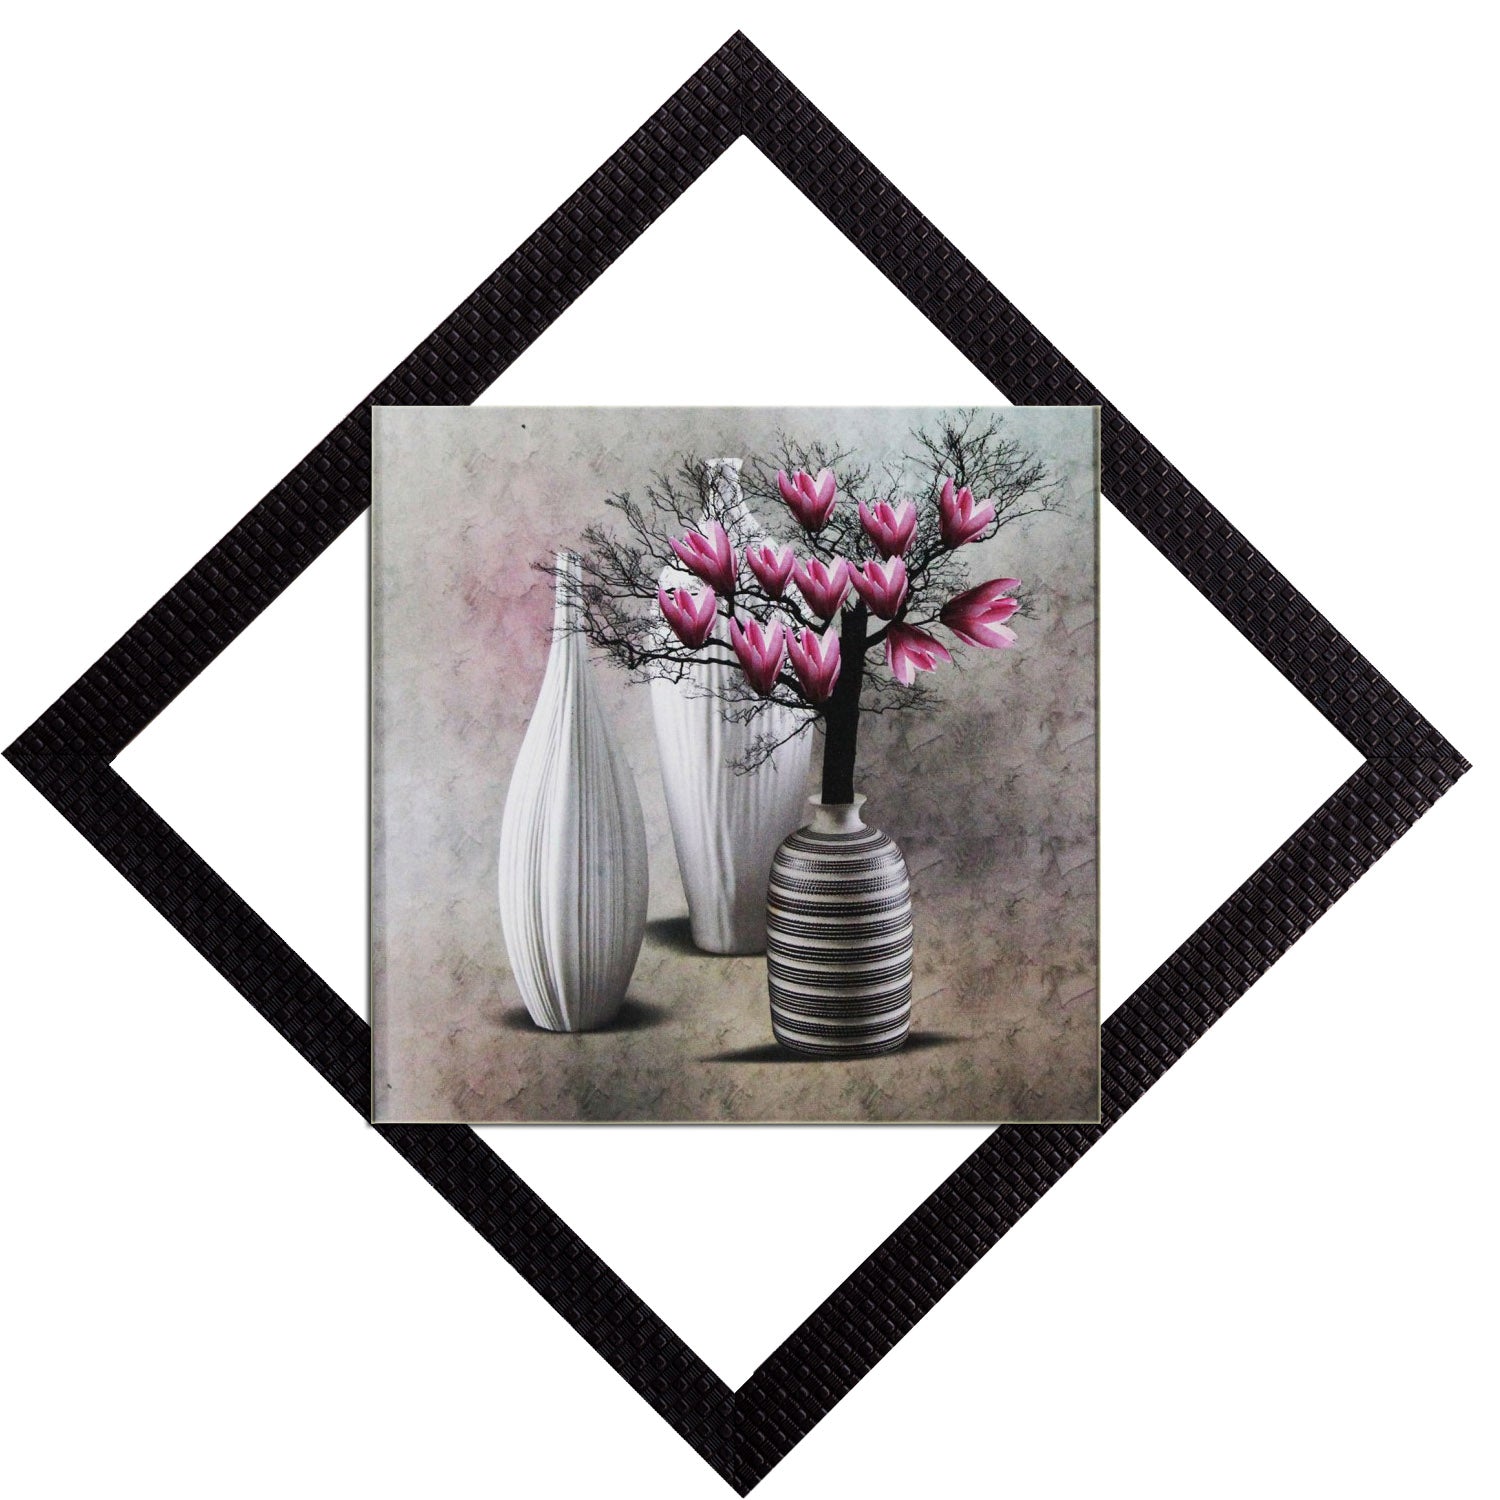 Vases With Pink Flowers Satin Matt Texture UV Art Painting